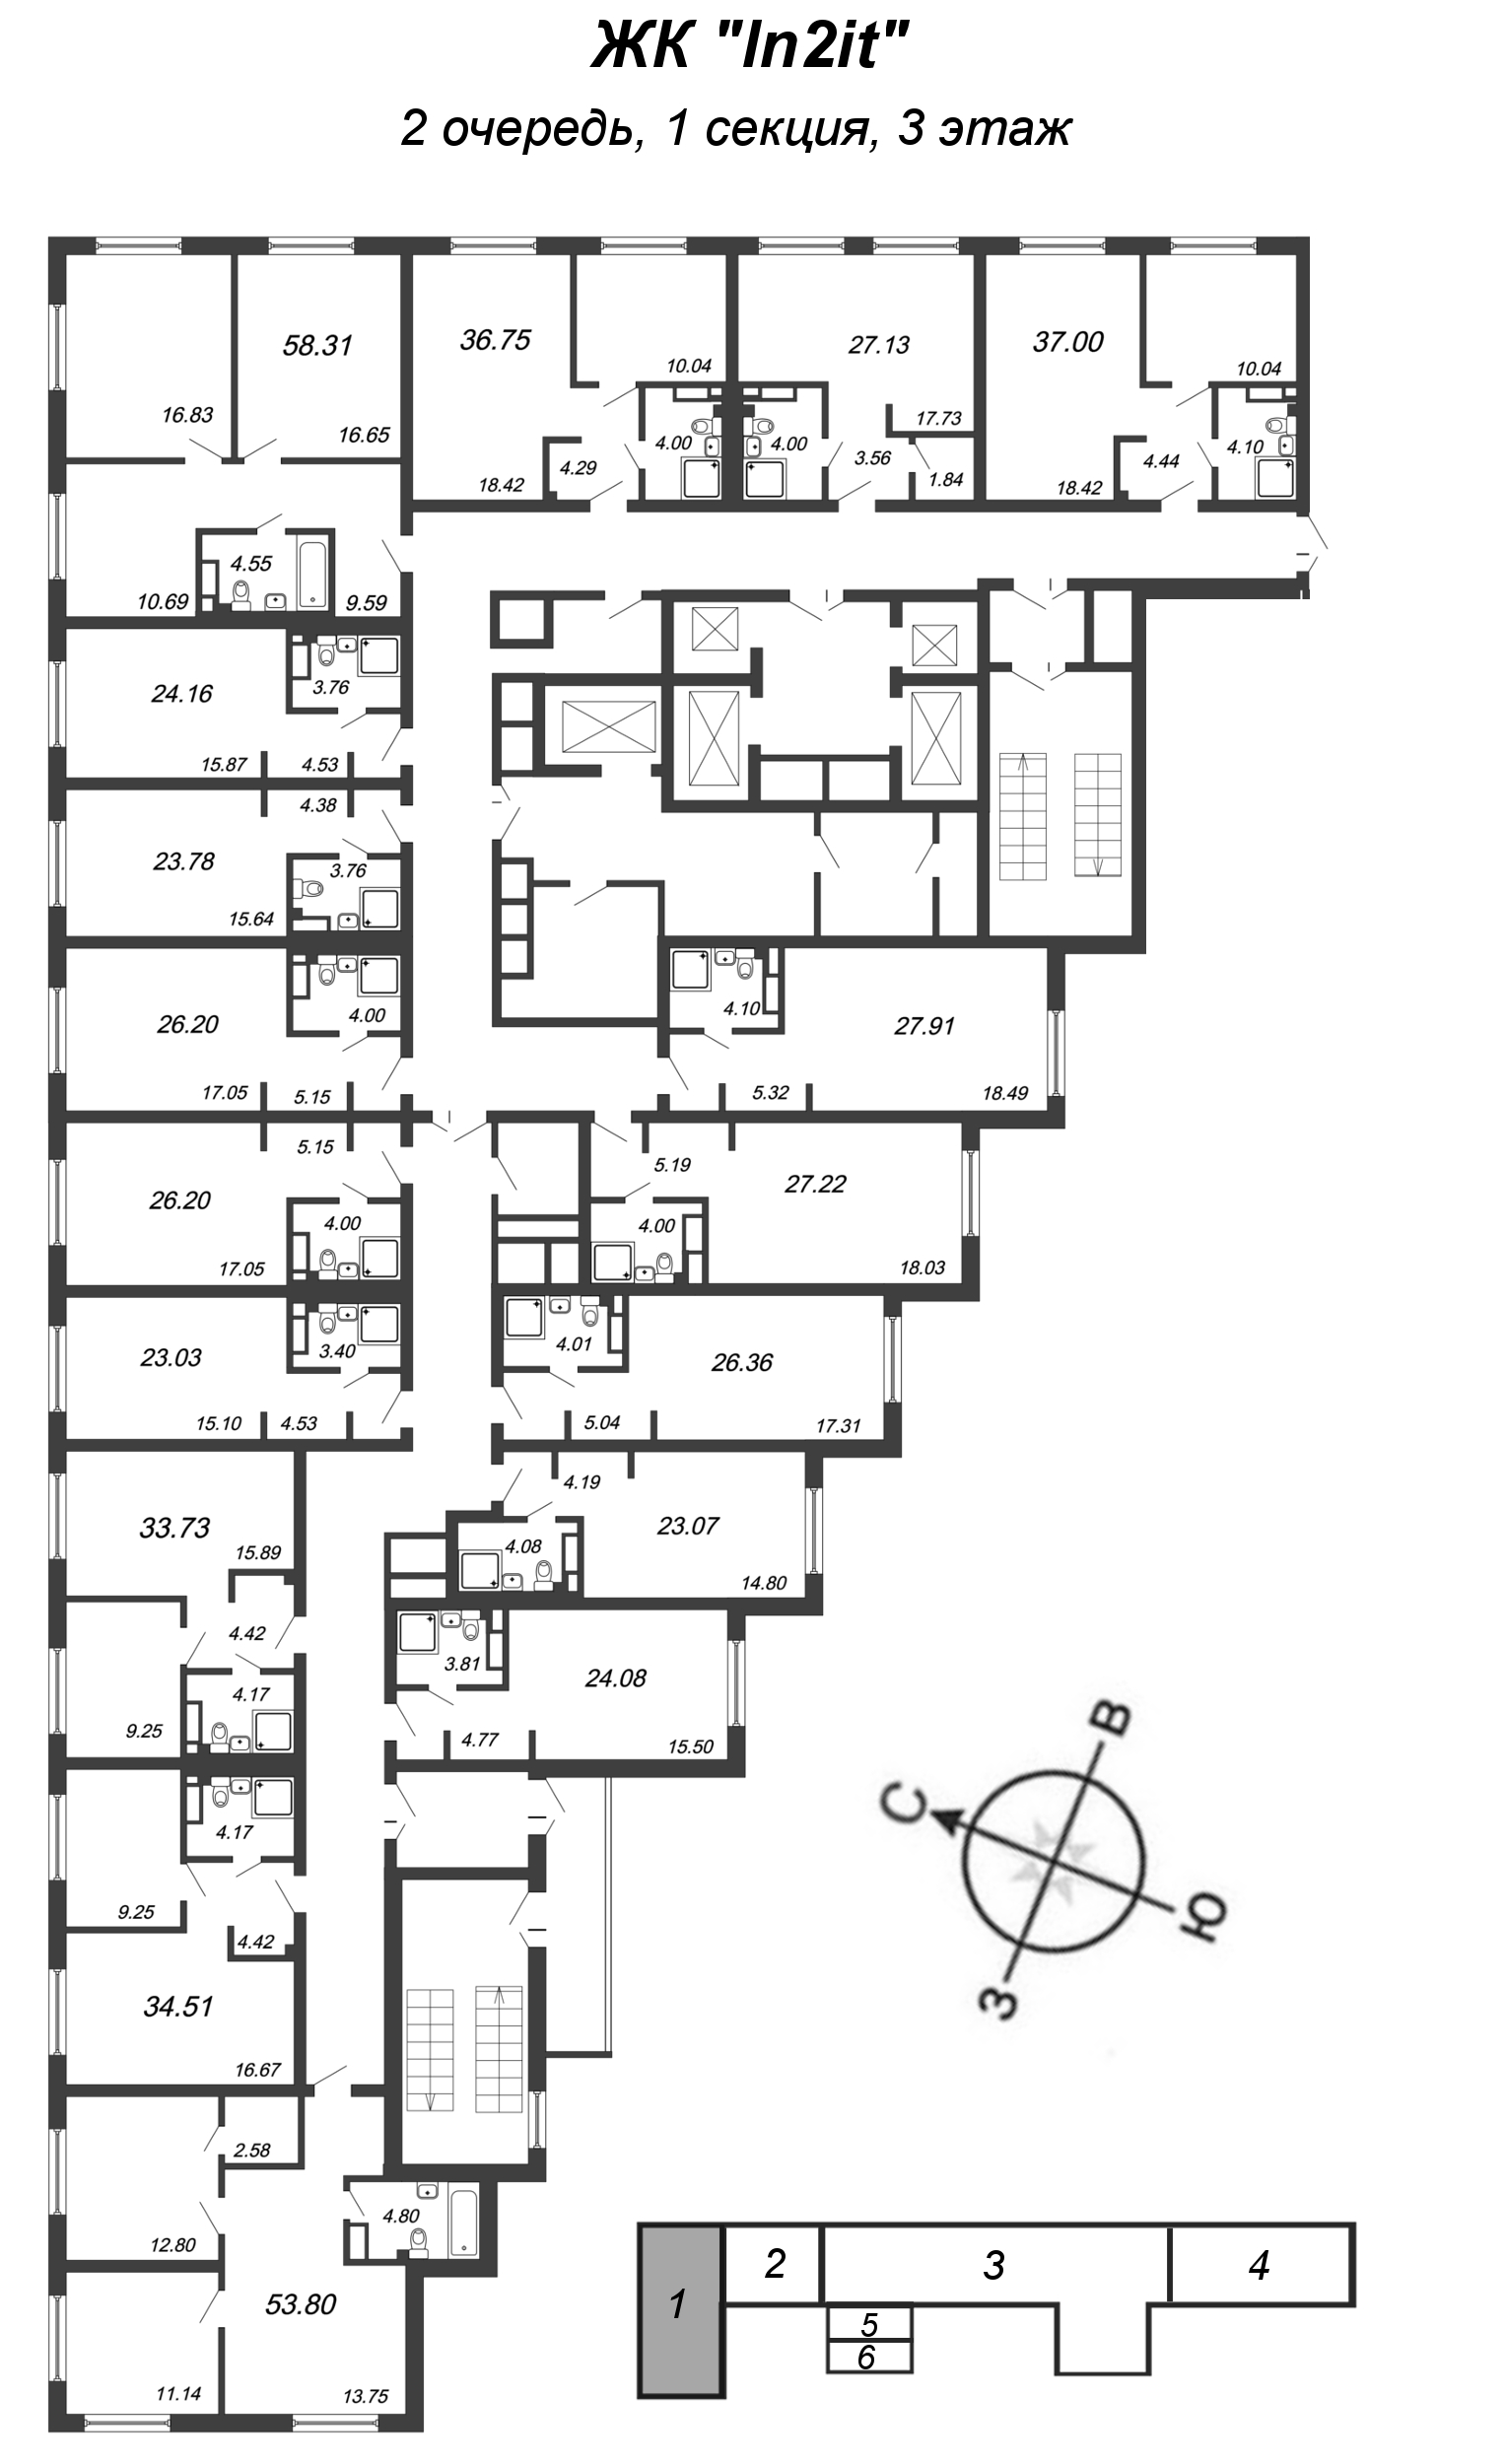 2-комнатная (Евро) квартира, 37.3 м² - планировка этажа